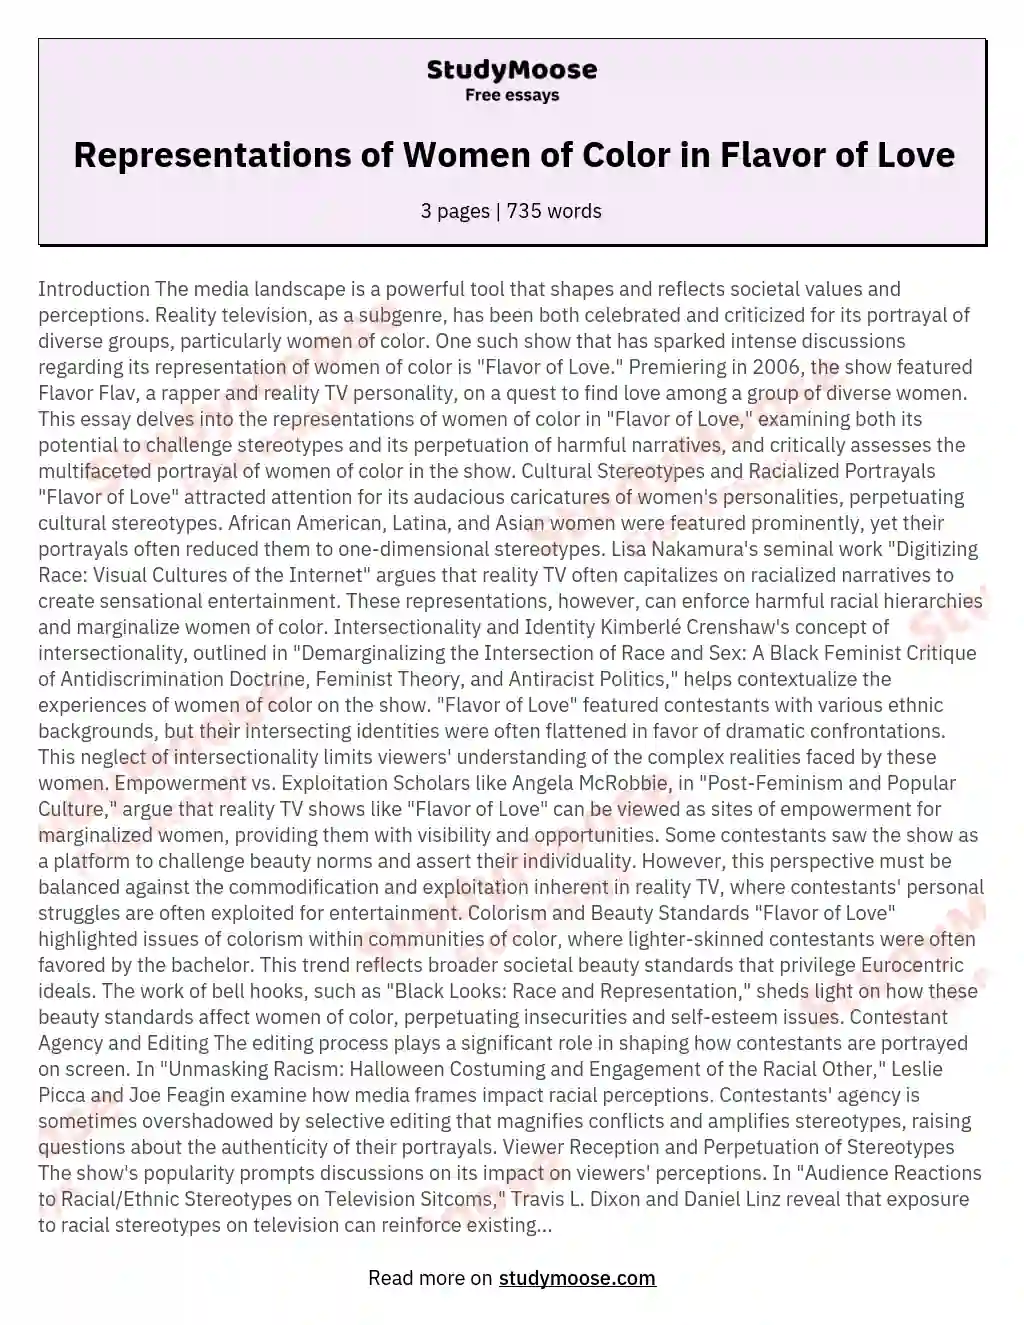 Representations of Women of Color in Flavor of Love essay